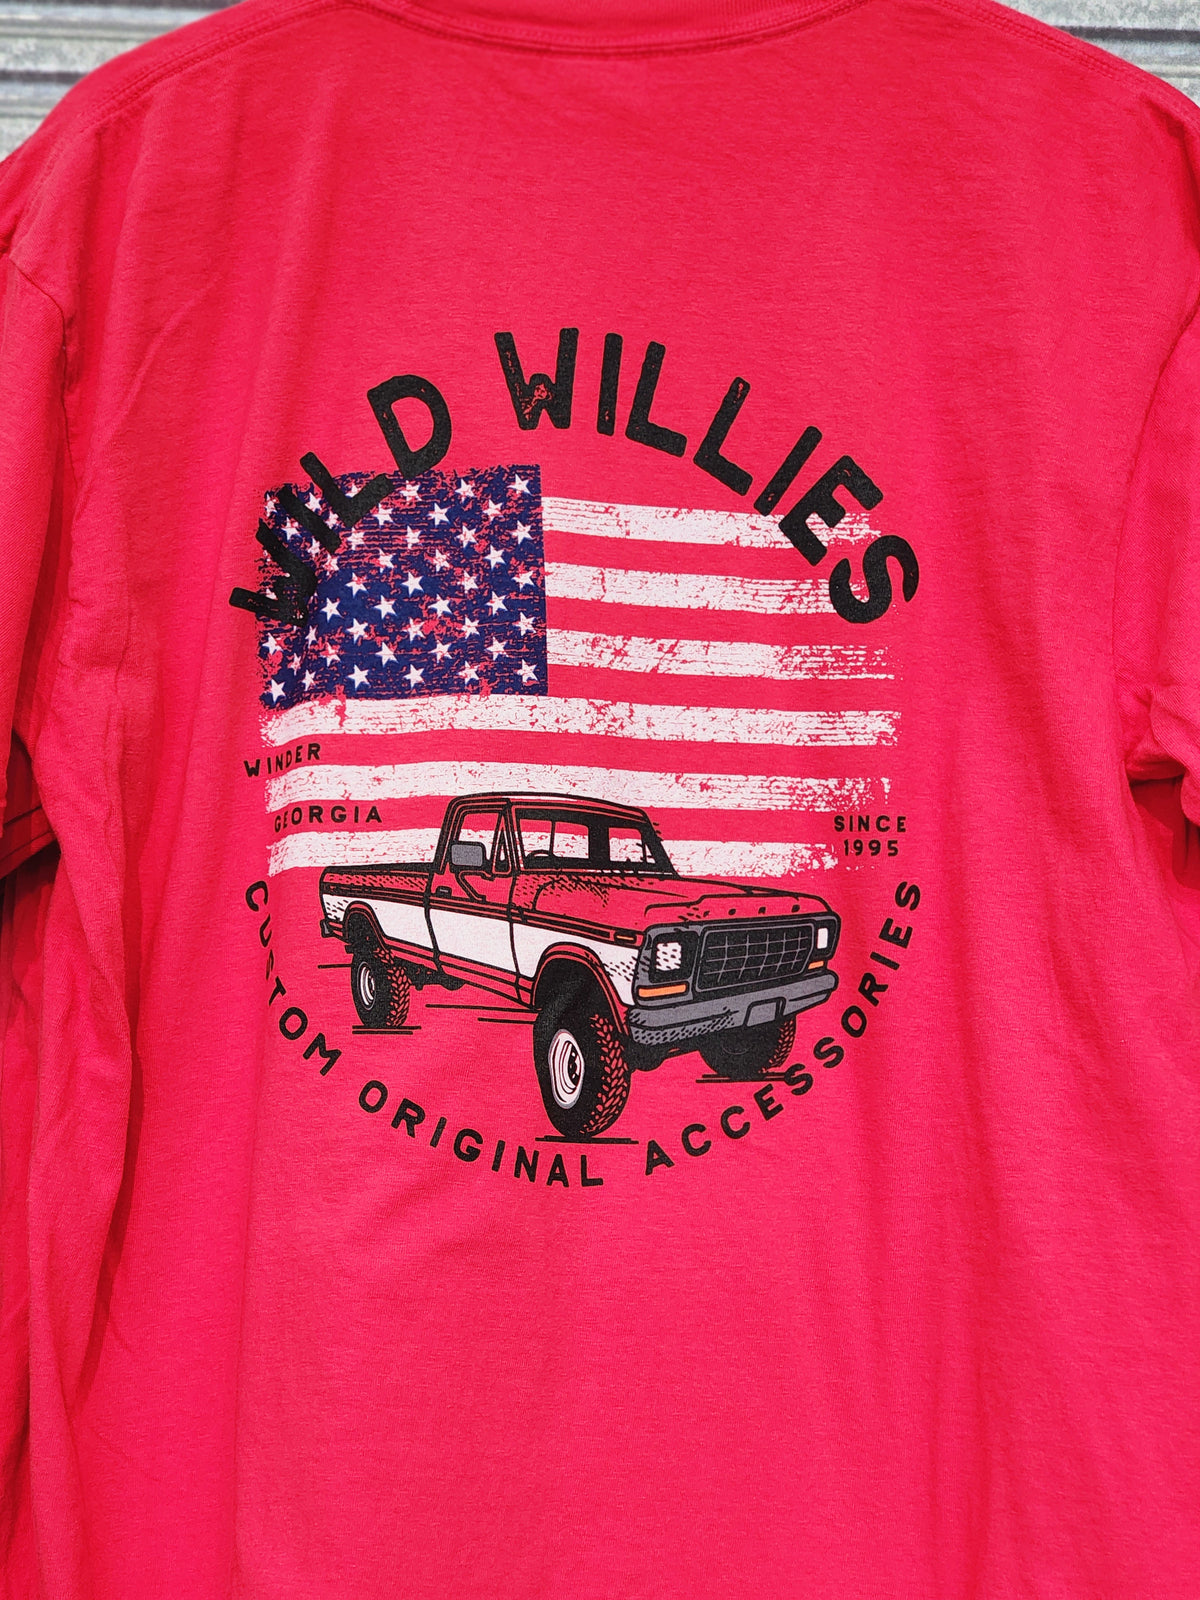 Wild Willies Flag Tees- Comfort Colors Brand